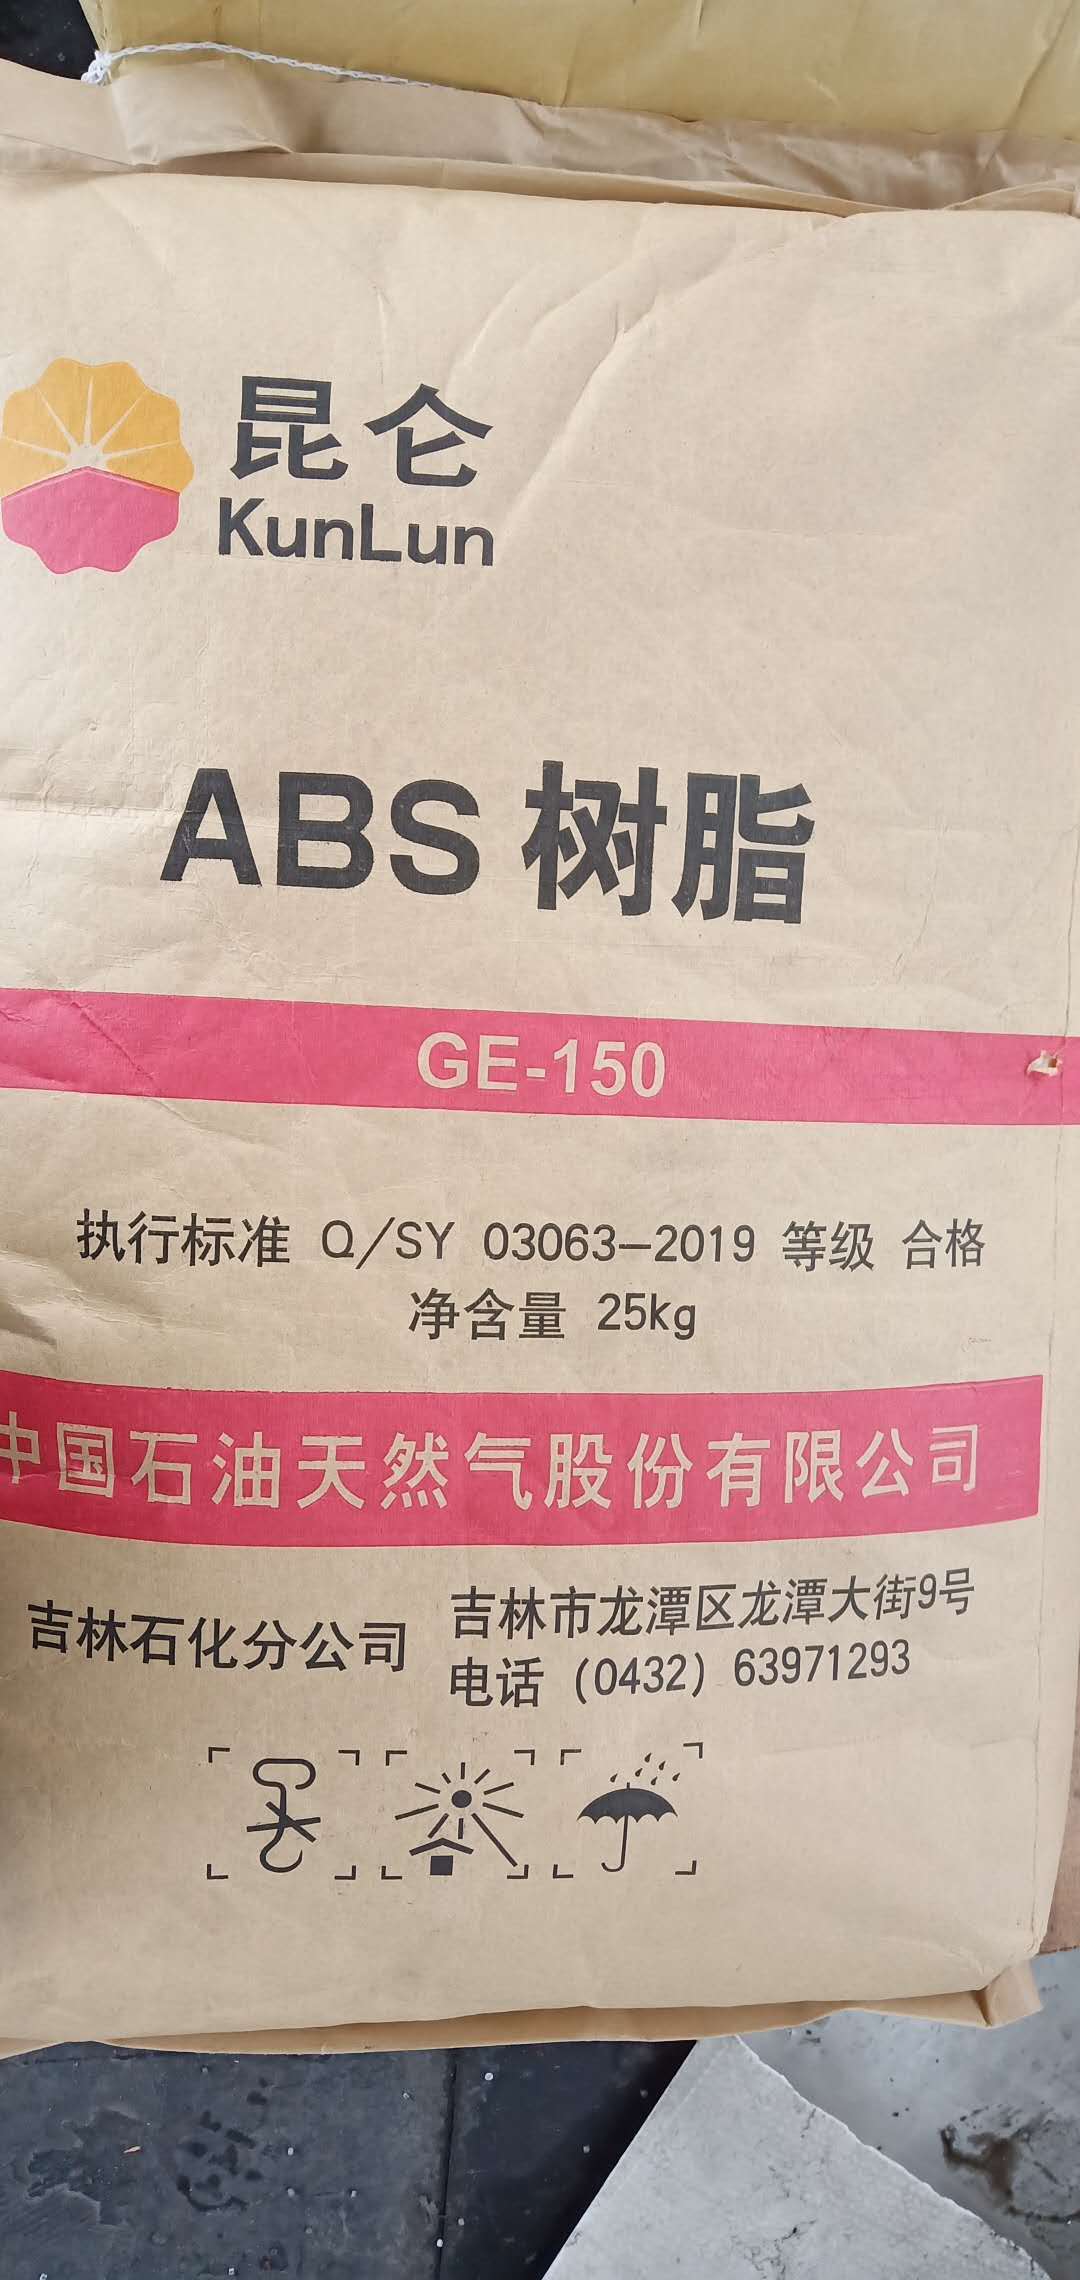 GE-150 中石油吉林 昆仑ABS树脂20186A-5图